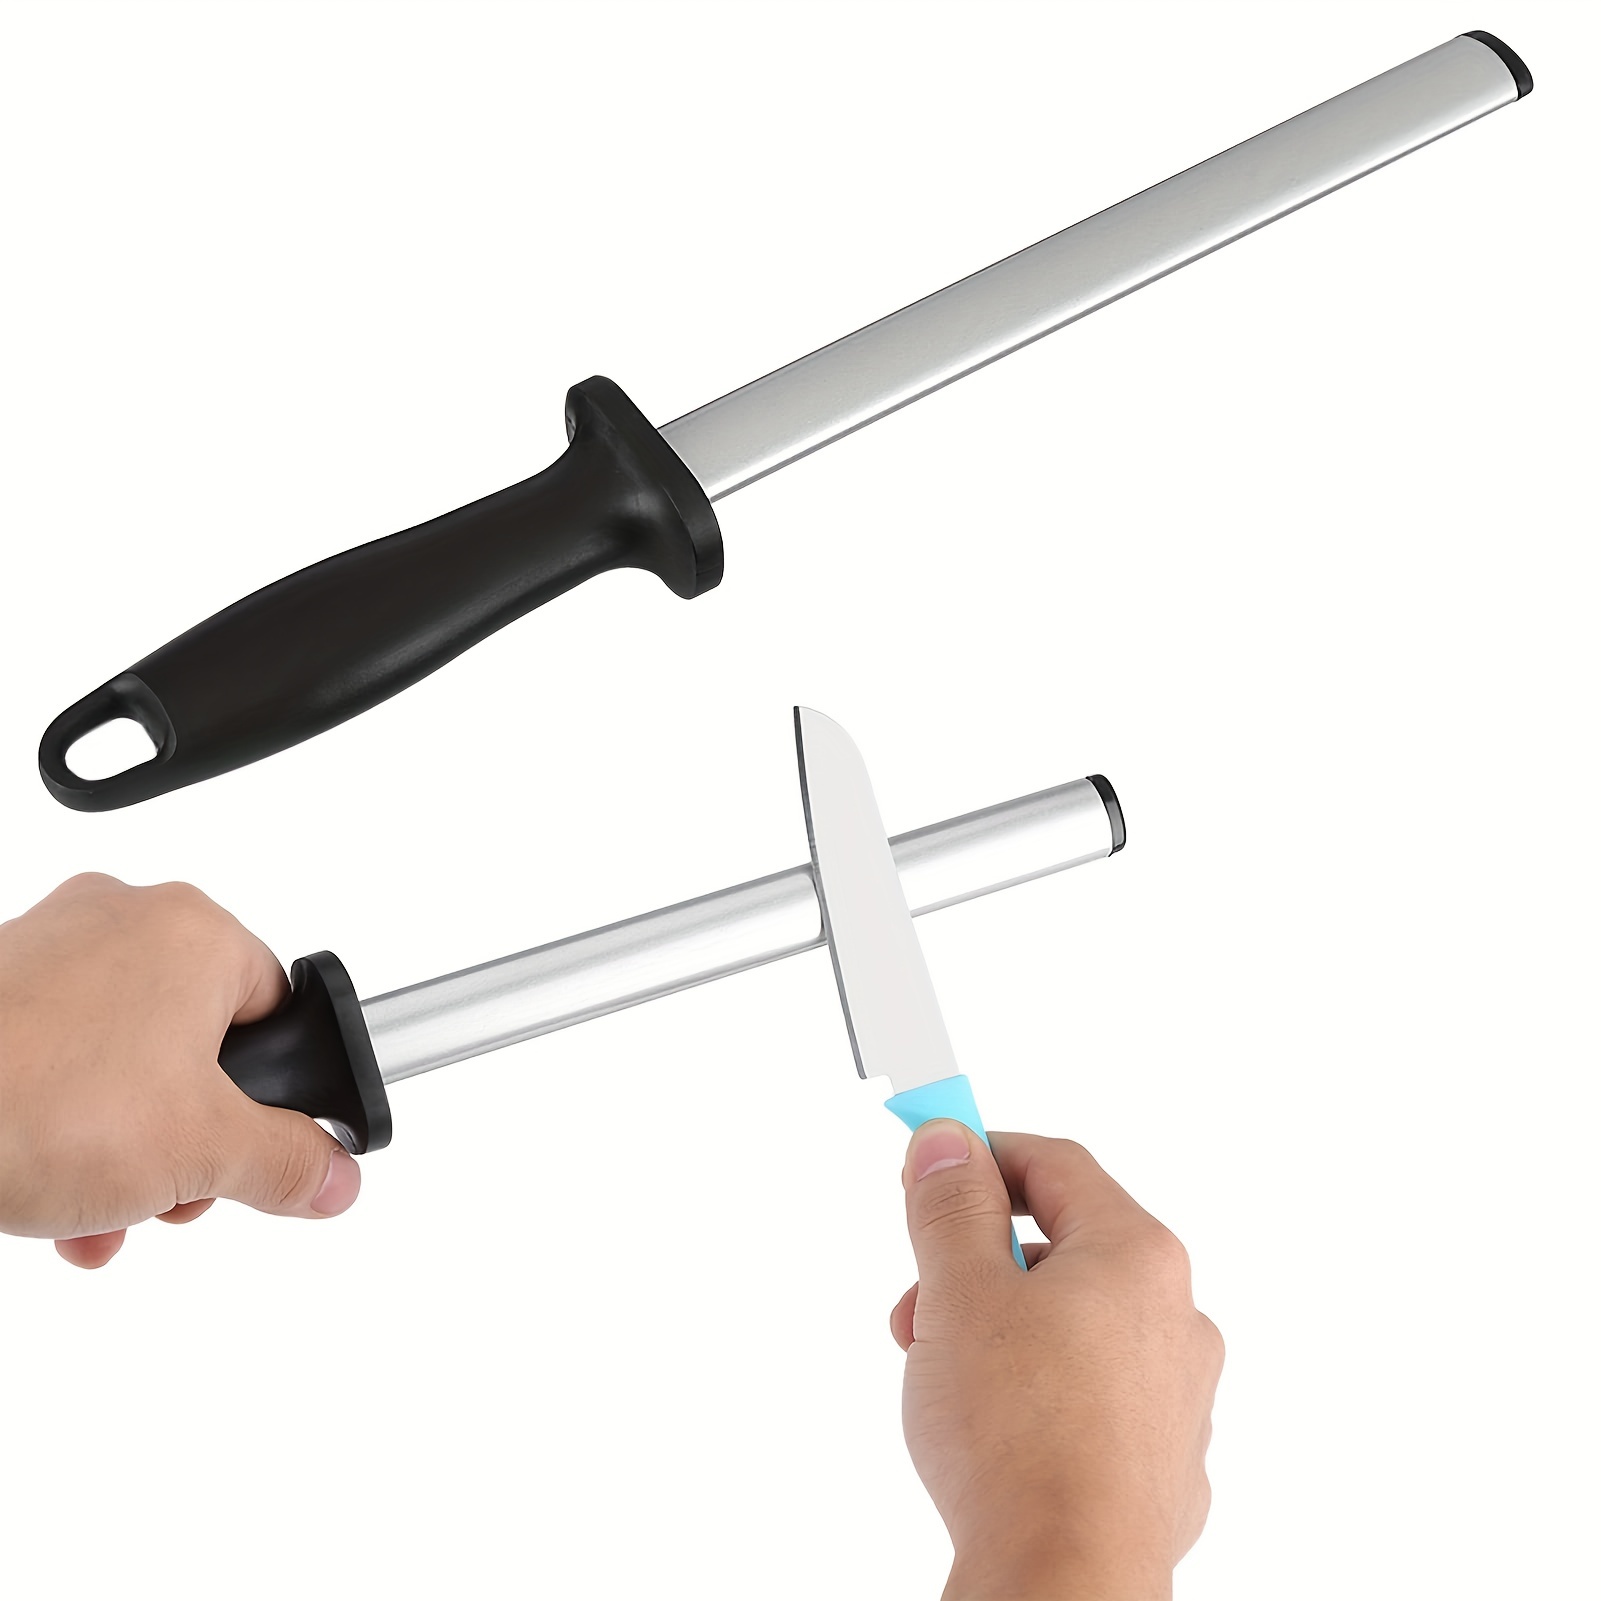 12 Knife Sharpener Sharpening Rod ABS Handle Honing Sharpening Steel For  Knives